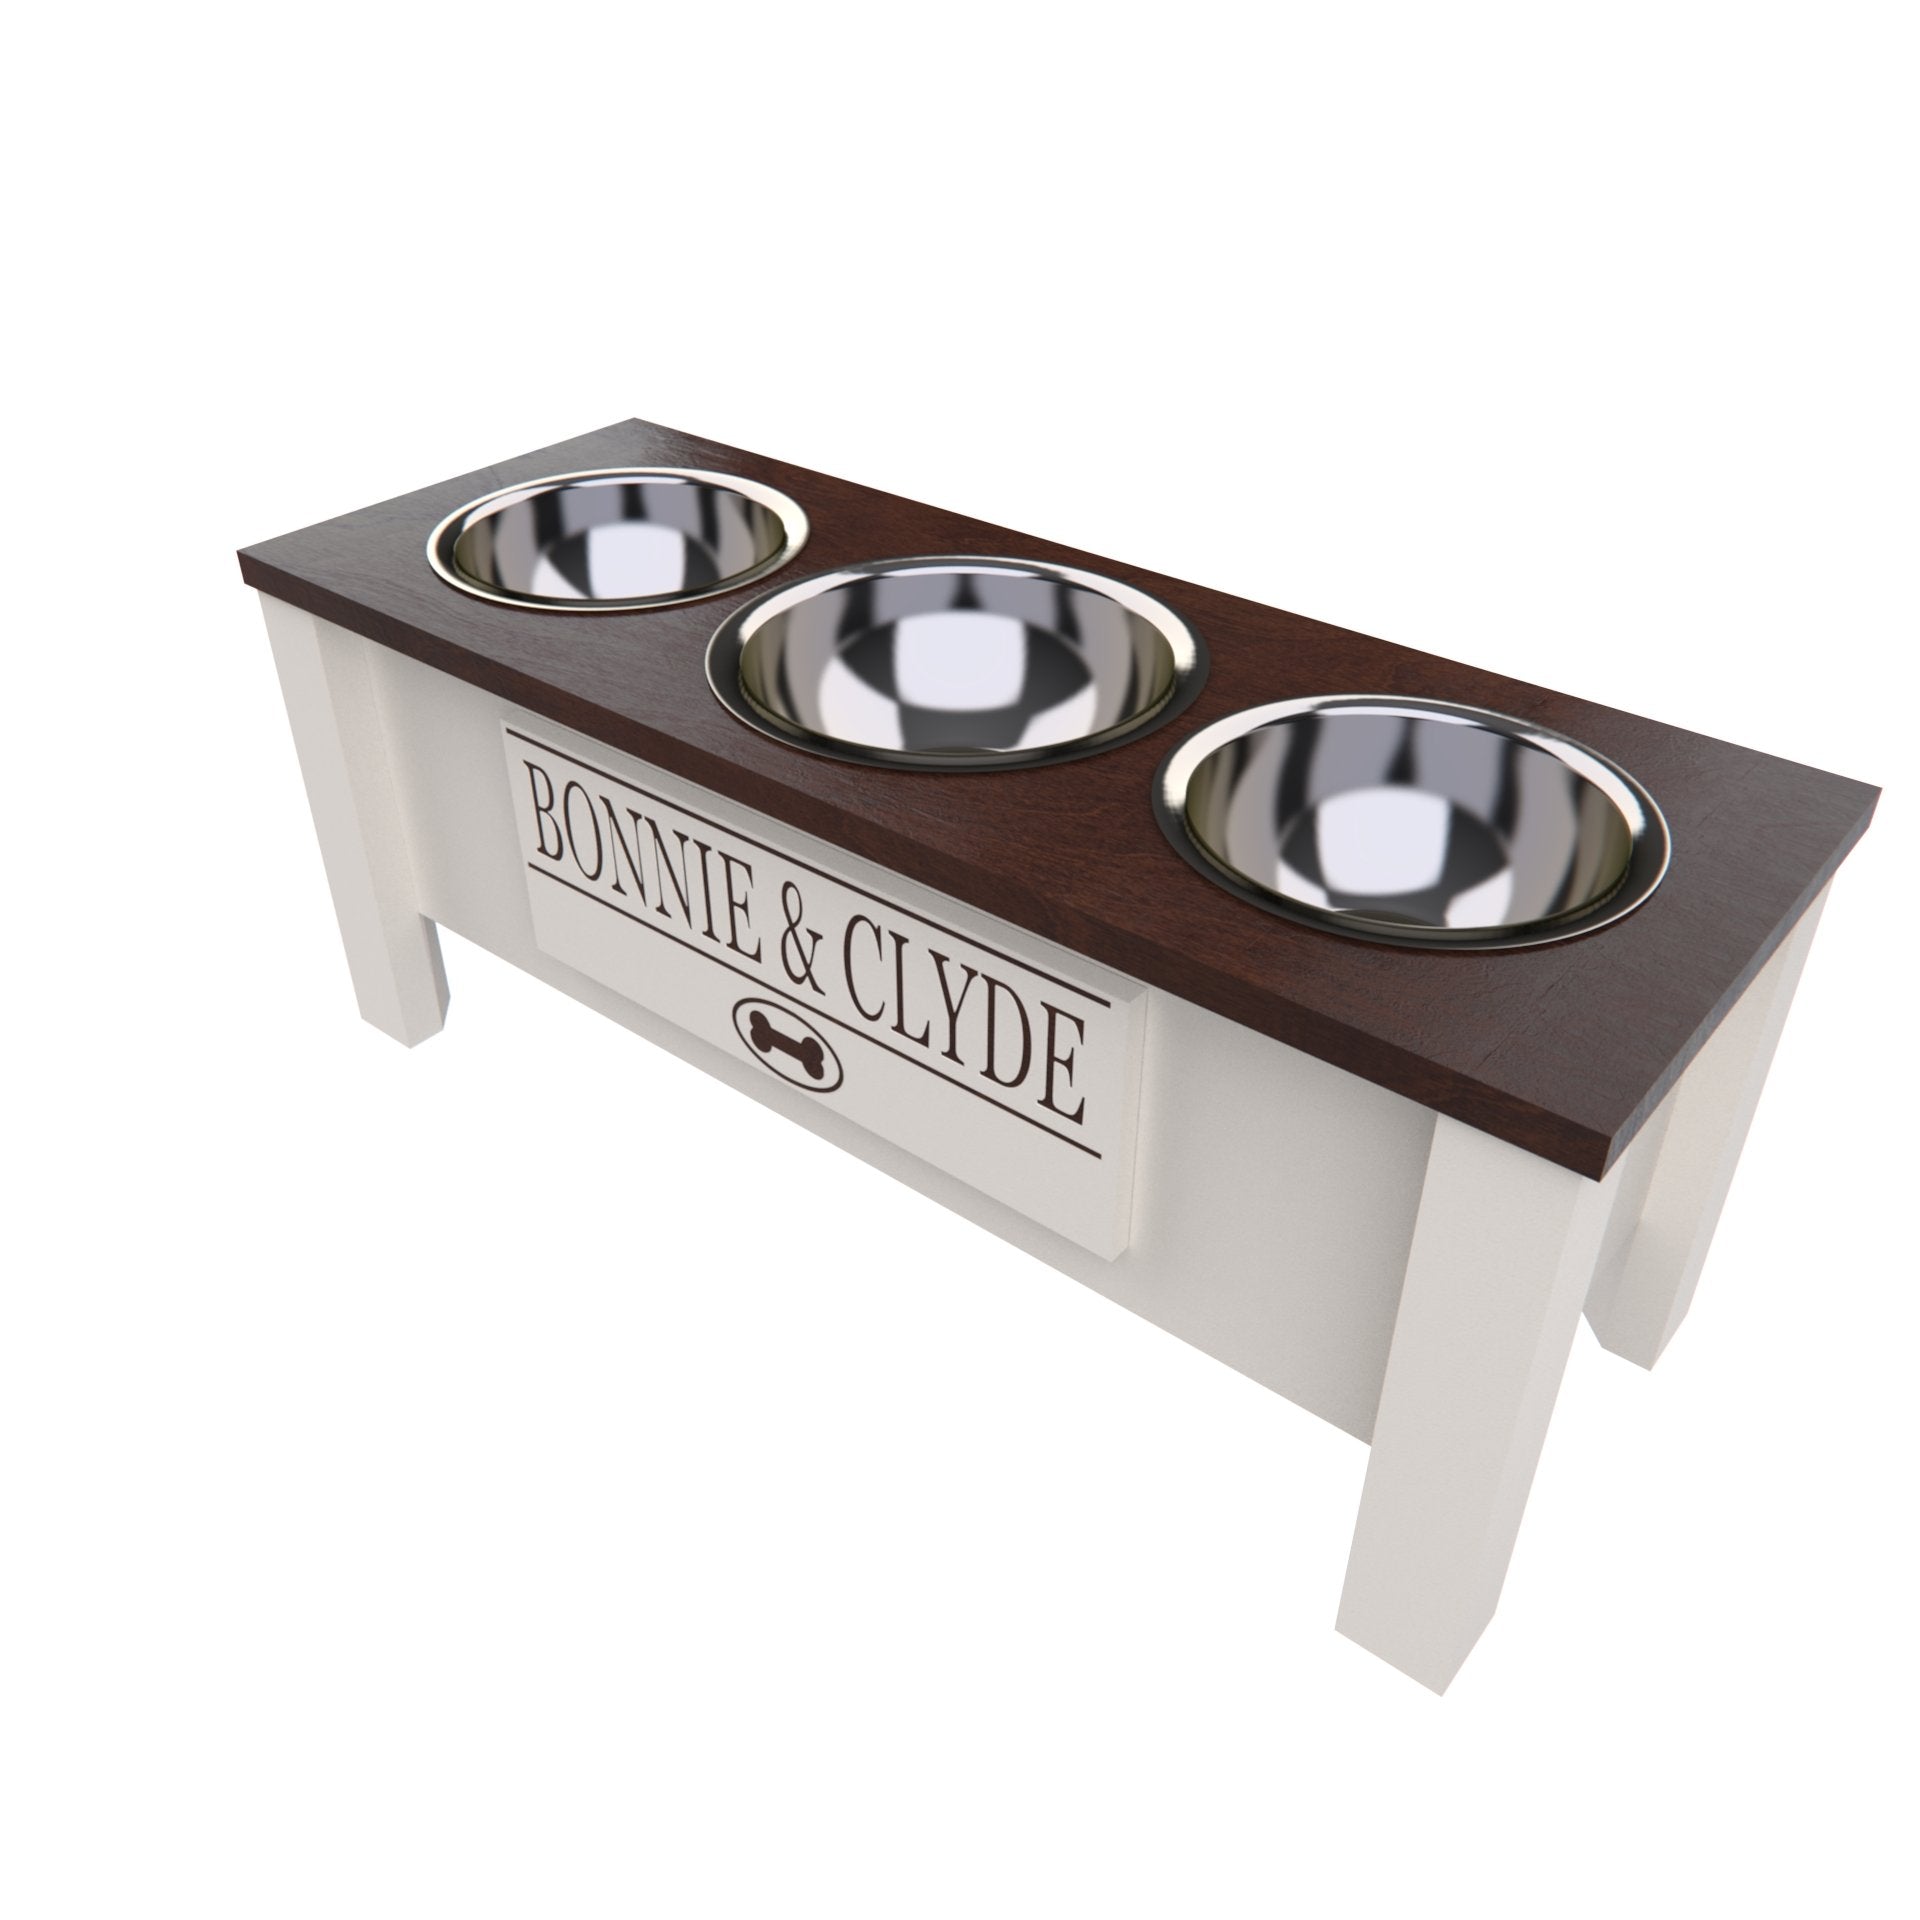 Personalized 3 Bowl Elevated Dog Feeder in Dark Walnut - GrooveThis Woodshop - GT006DW-L